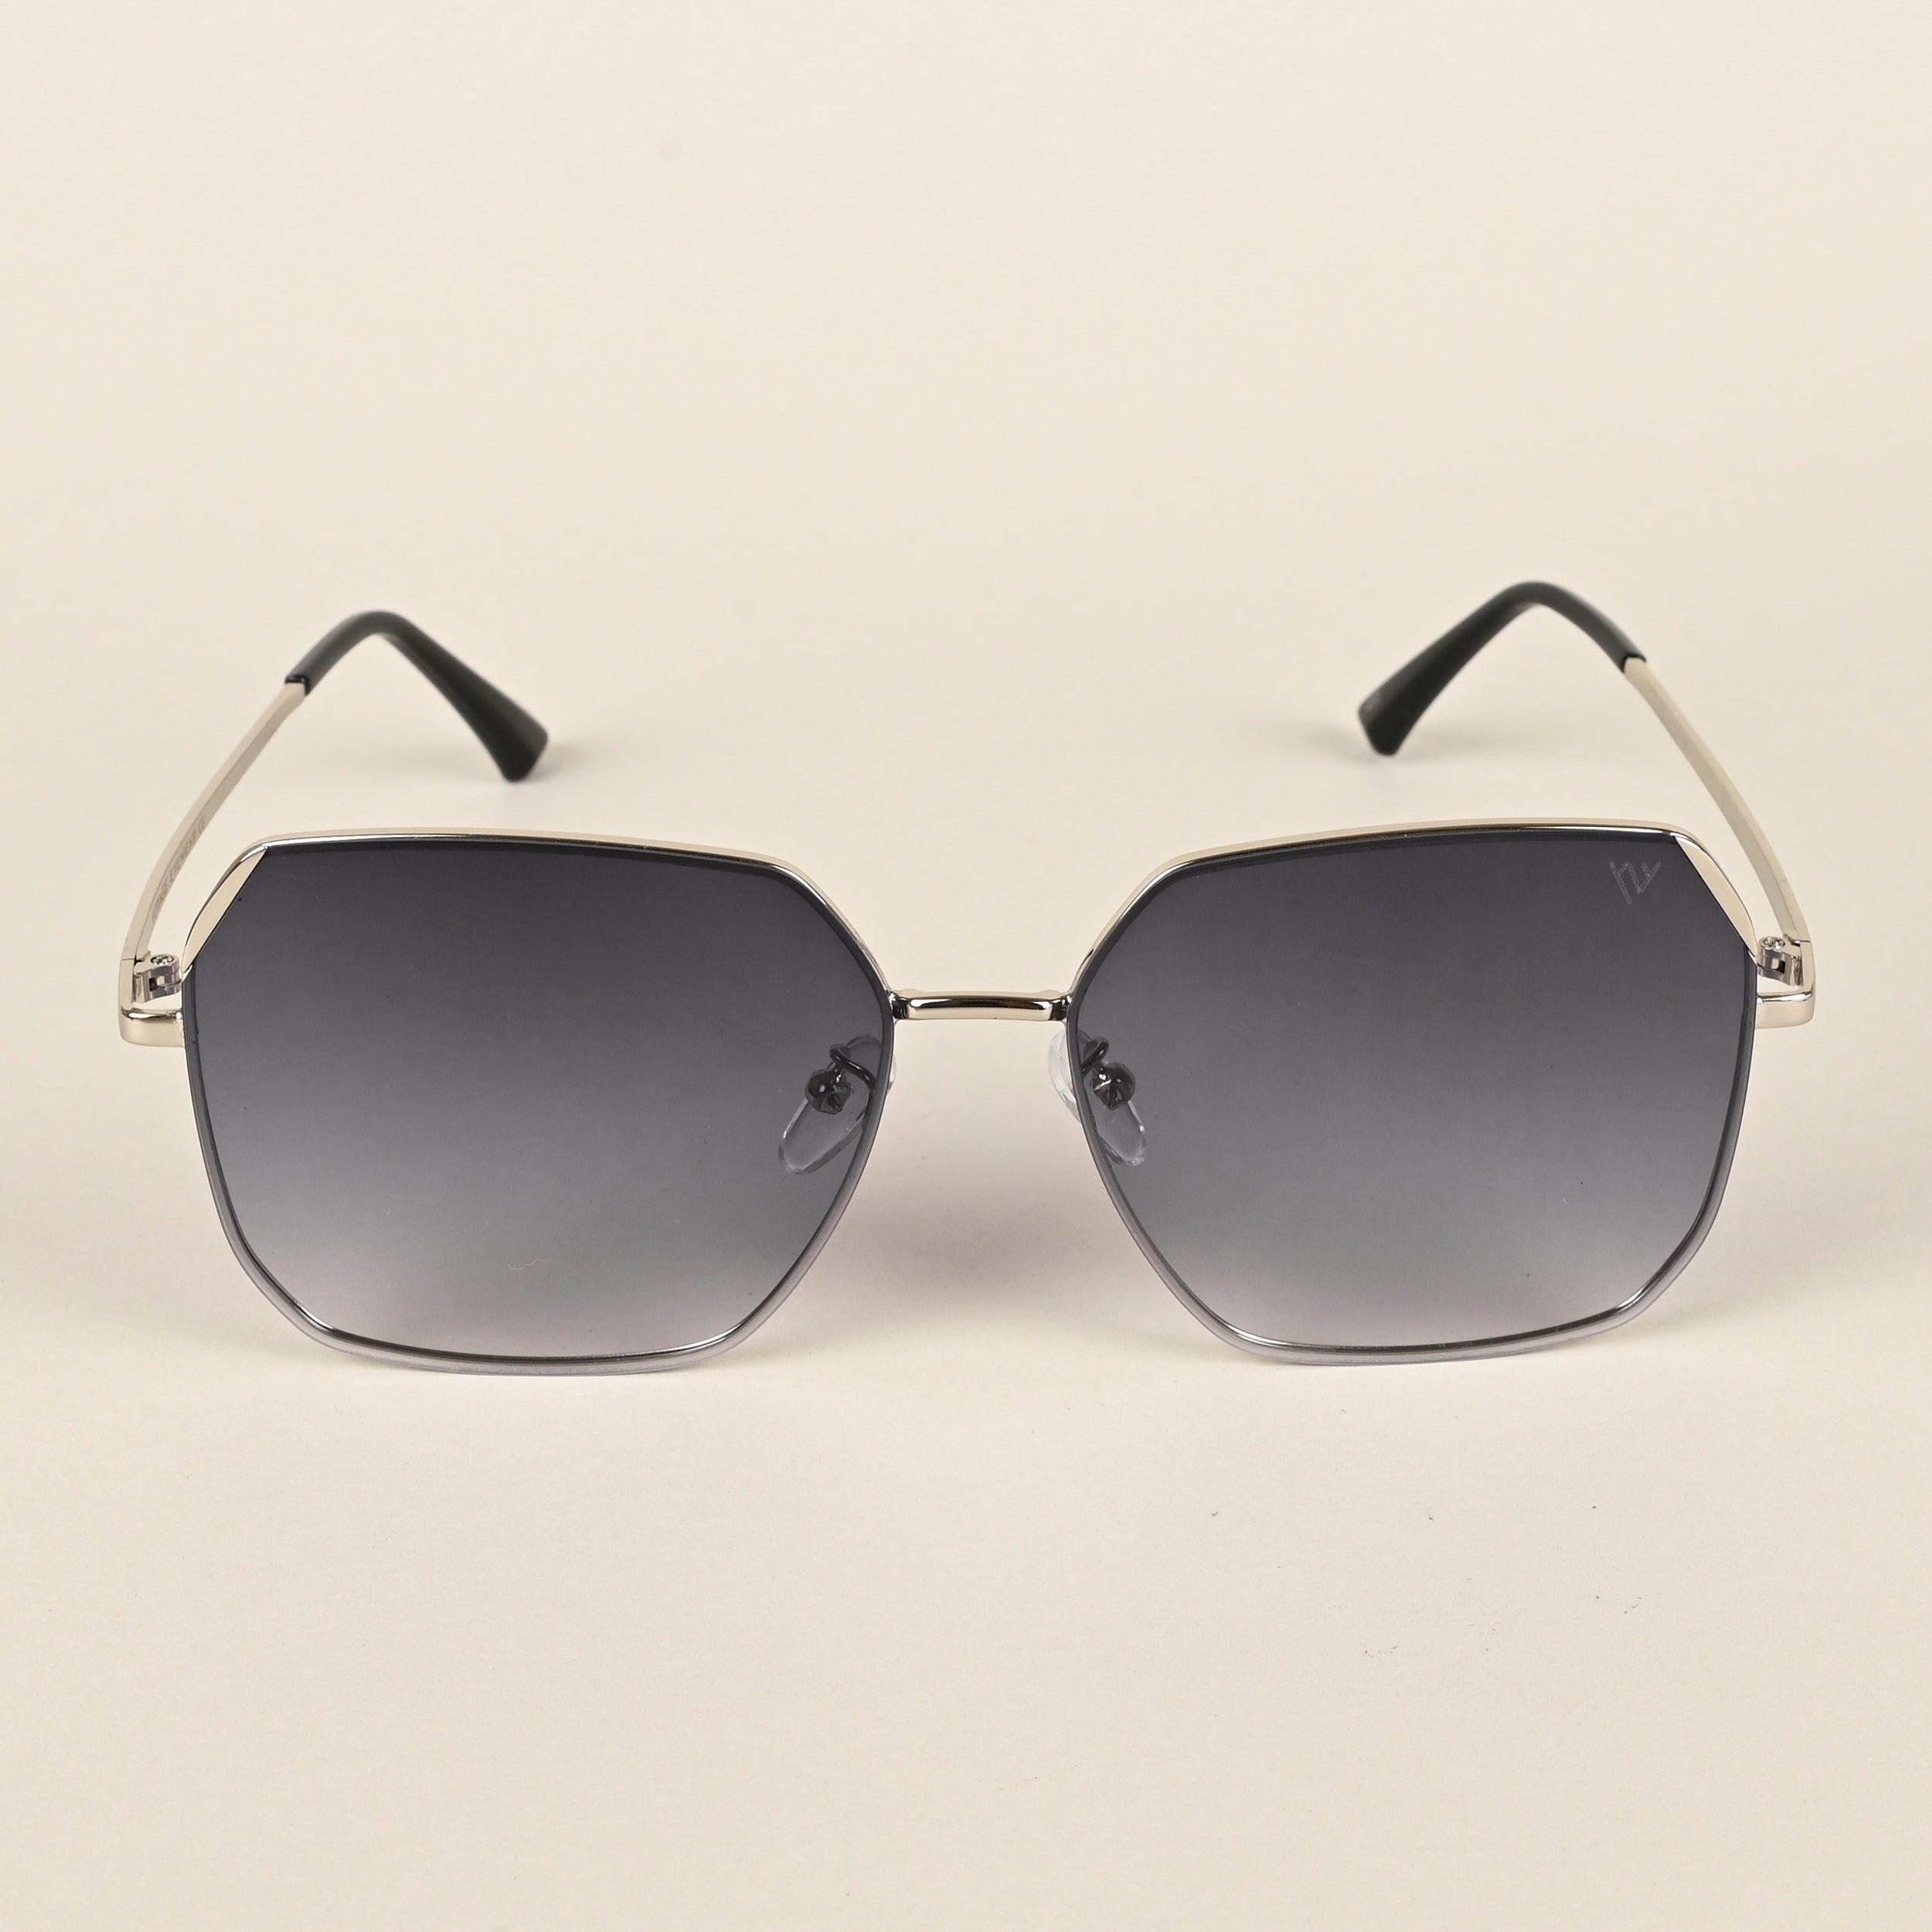 Voyage Grey Square Sunglasses for Men & Women - MG4339